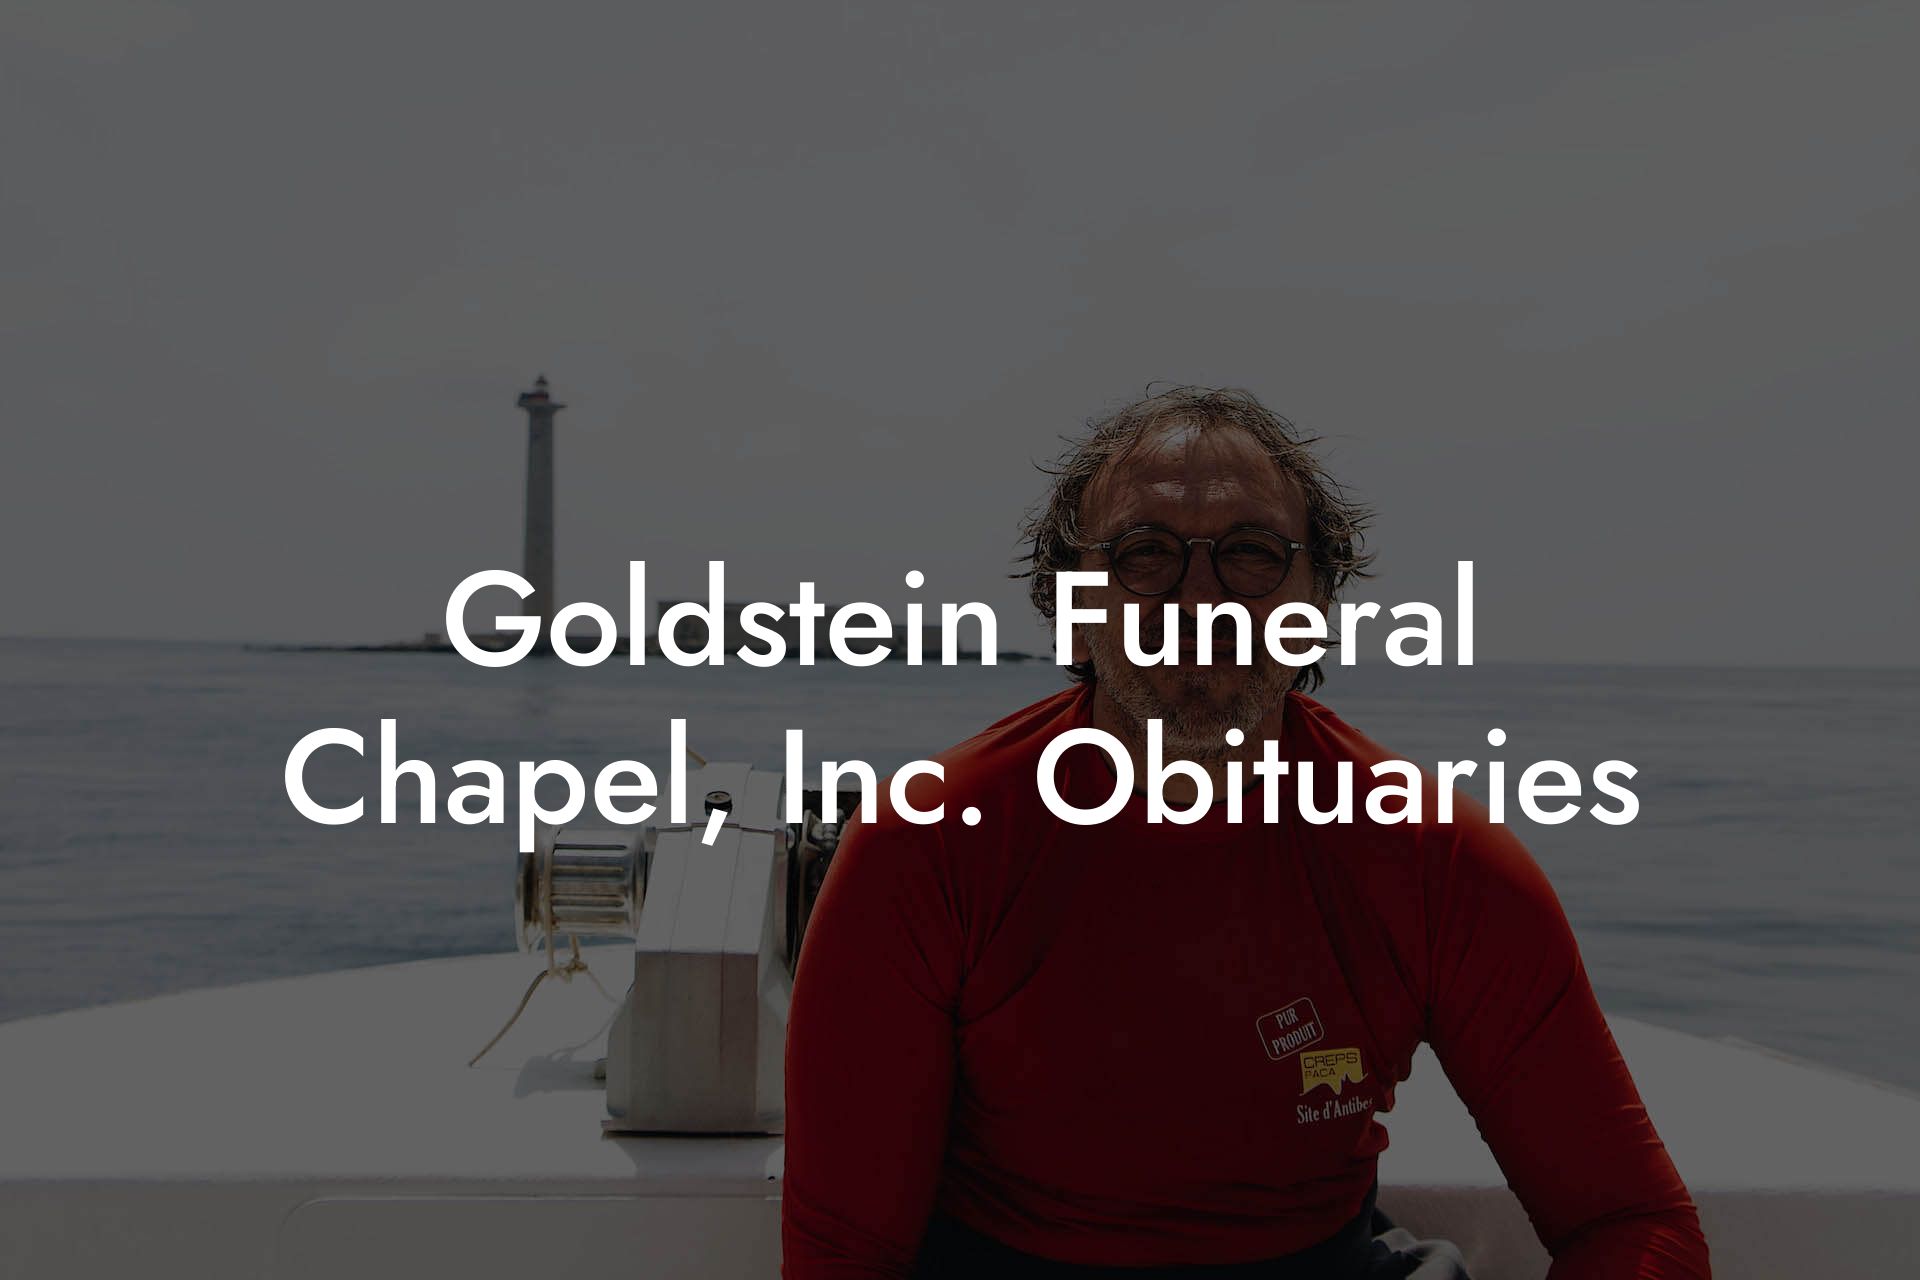 Goldstein Funeral Chapel, Inc. Obituaries